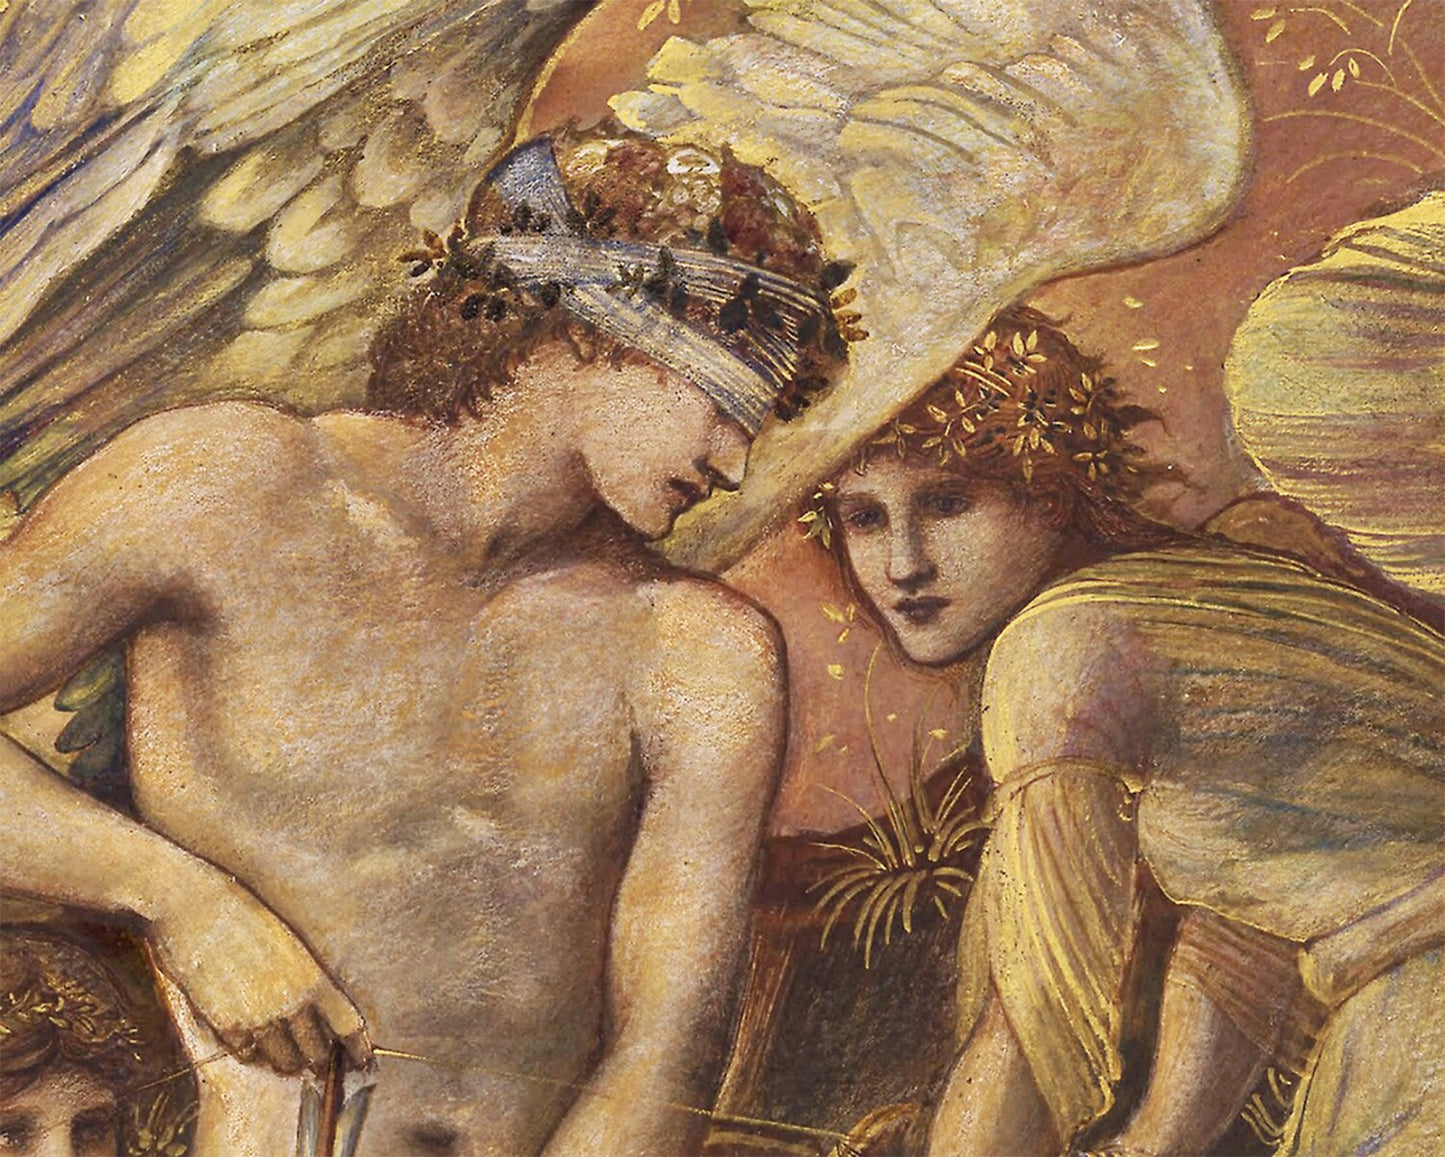 Vintage Cupid art print | Cupid's hunting ground | Love, romance & Valentine wall decor | Giclée fine art | Eco-friendly gift